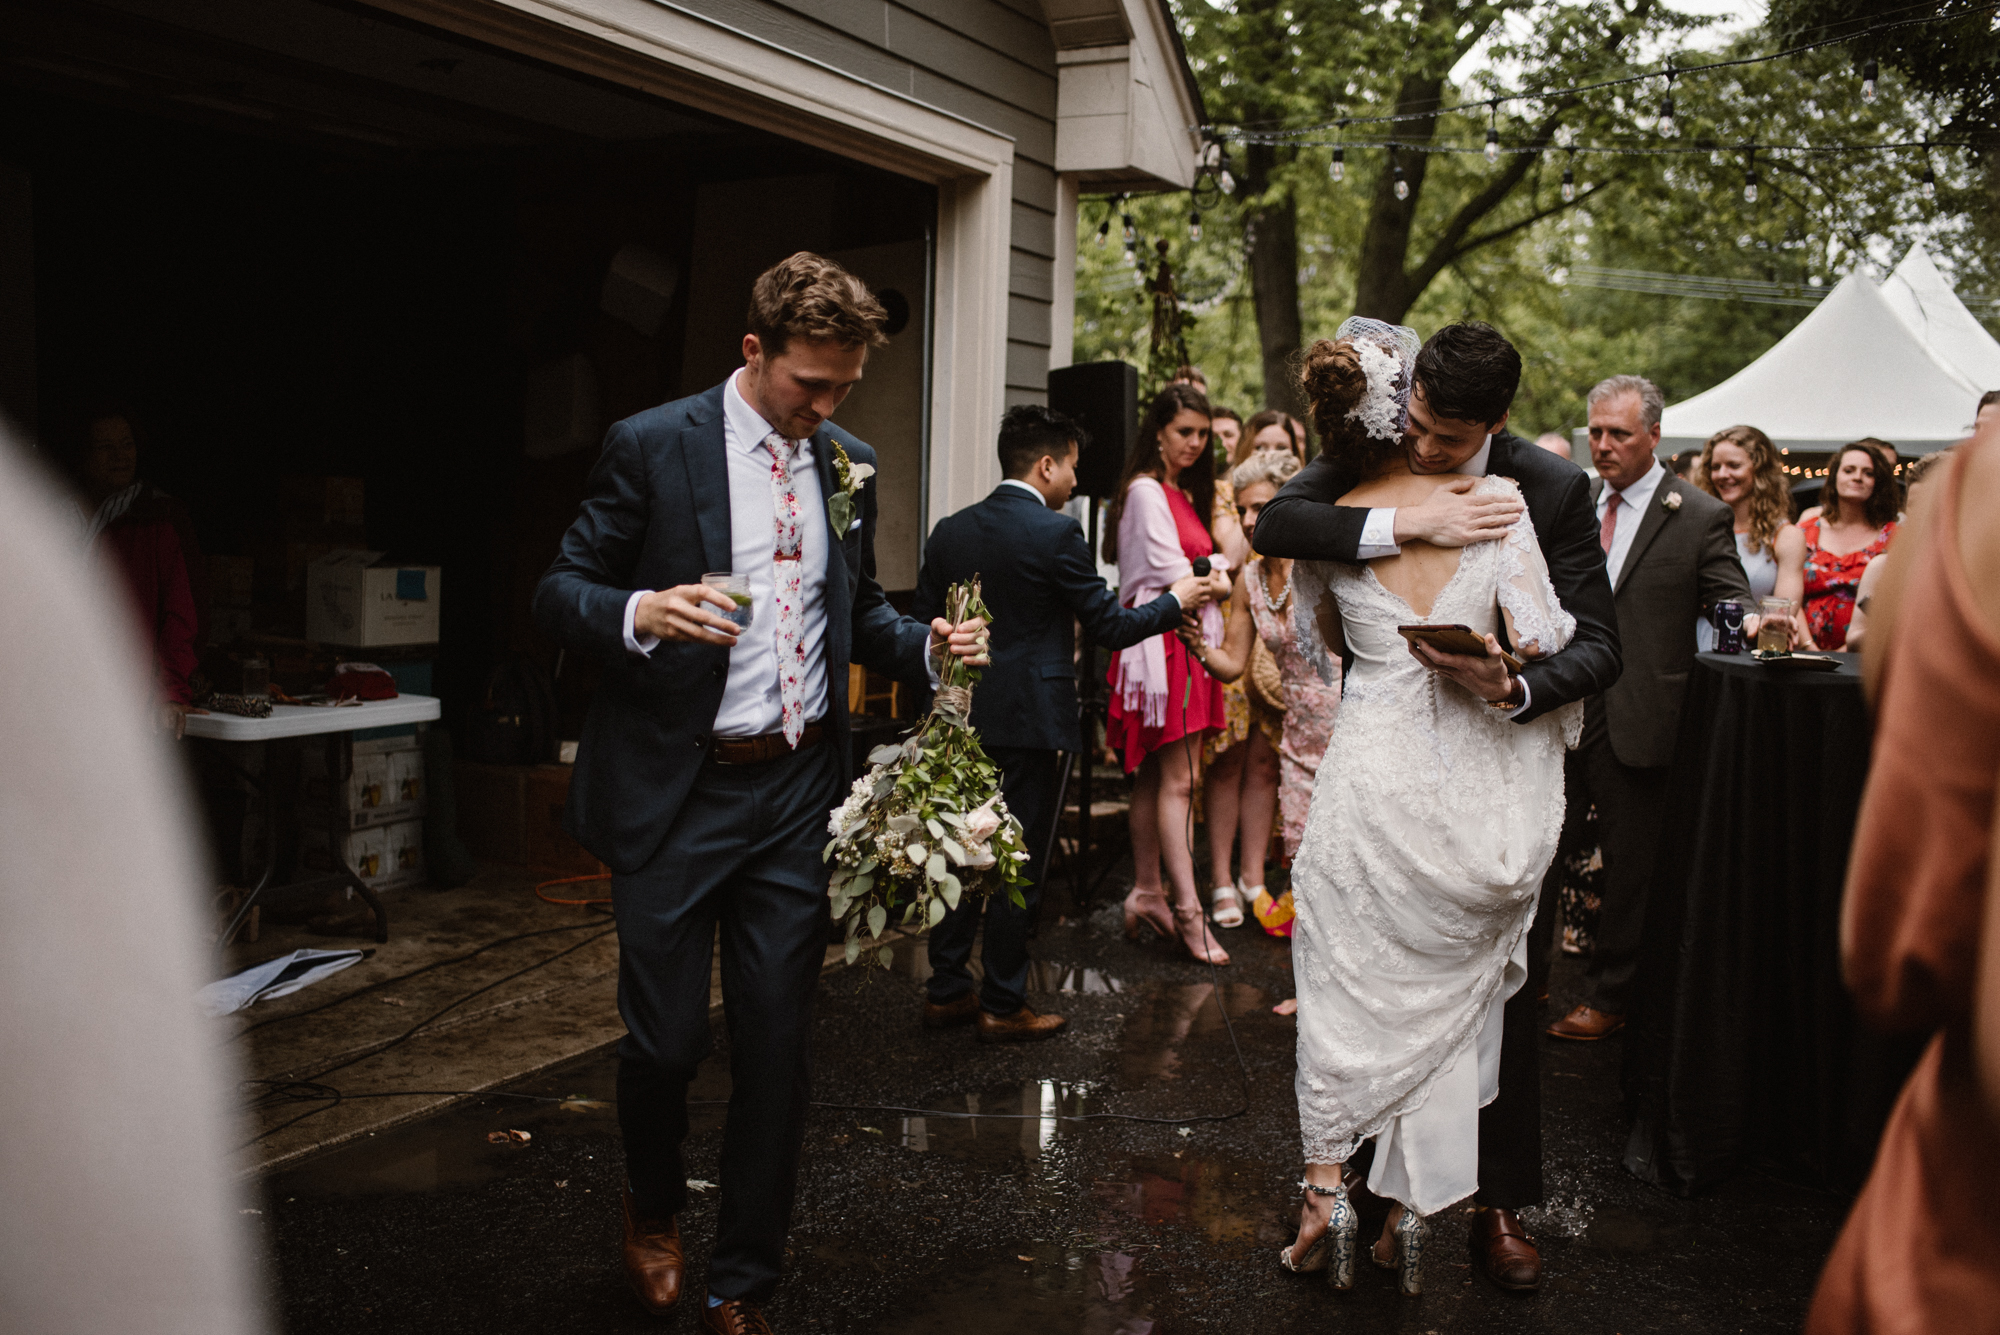 Mairi and Jude - Rainy Backyard Wedding - Intimate Wedding - Fun Reception Photos - Chicago Wedding Photographer - Catholic Wedding - White Sails Creative - Virginia Backyard Wedding Photographer_53.jpg